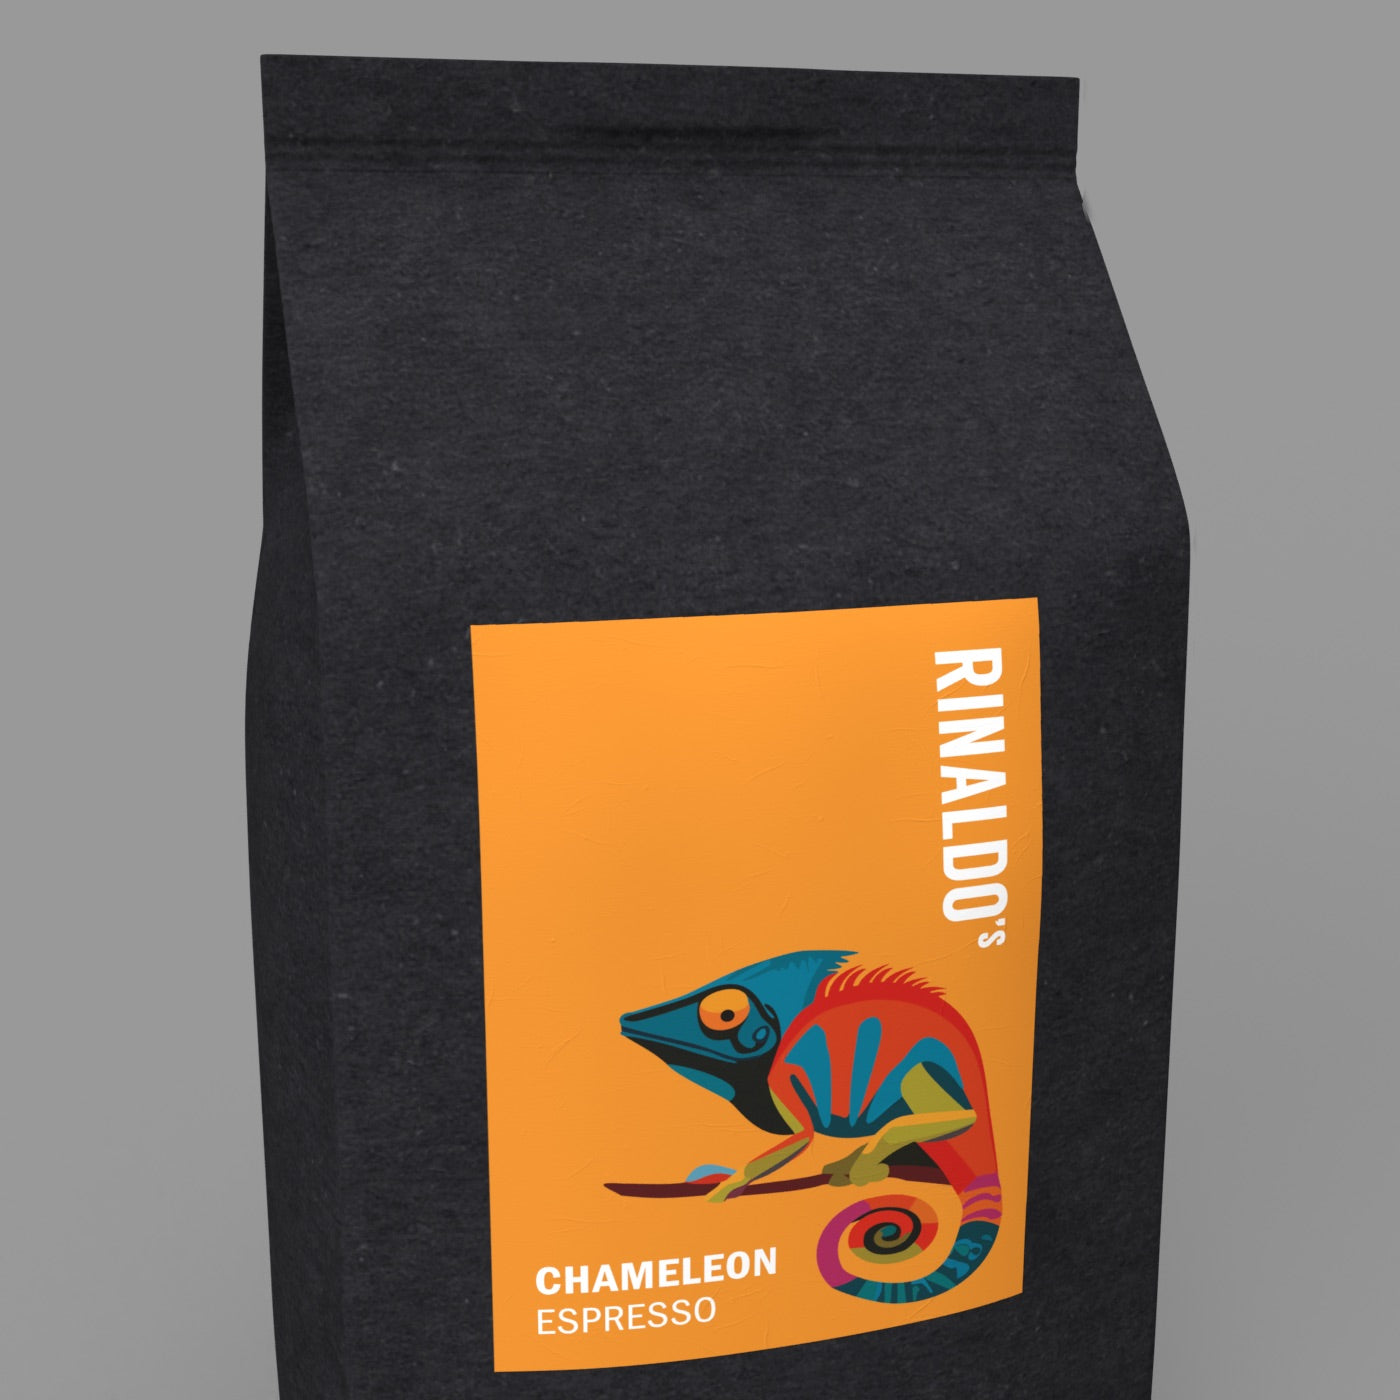 Chameleon: Our Dynamic Espresso Blend